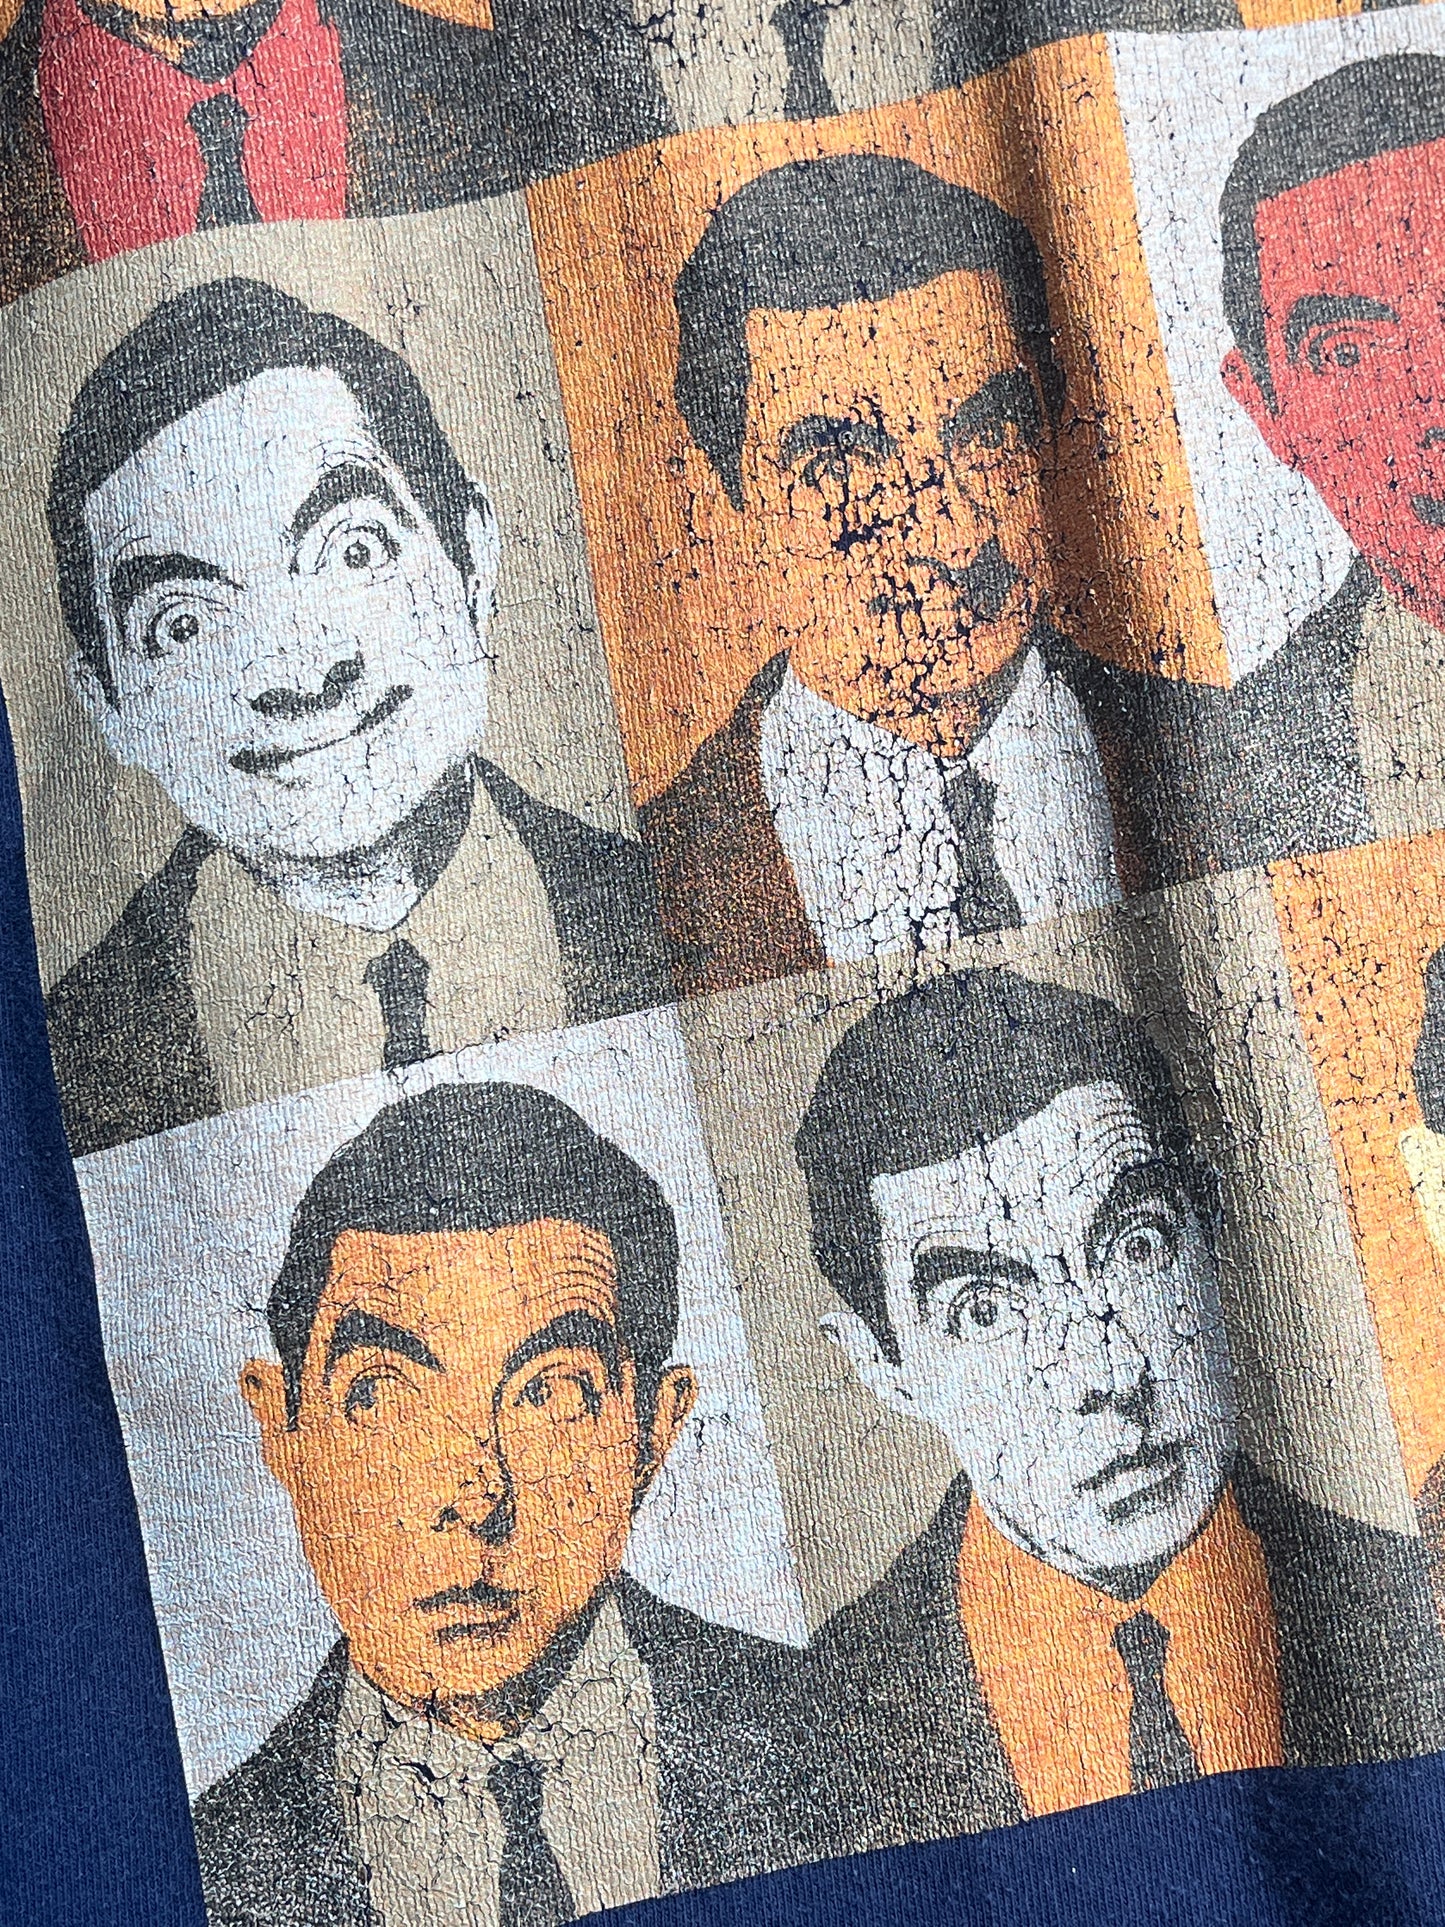 Vintage Mr Bean T-Shirt Pop Art